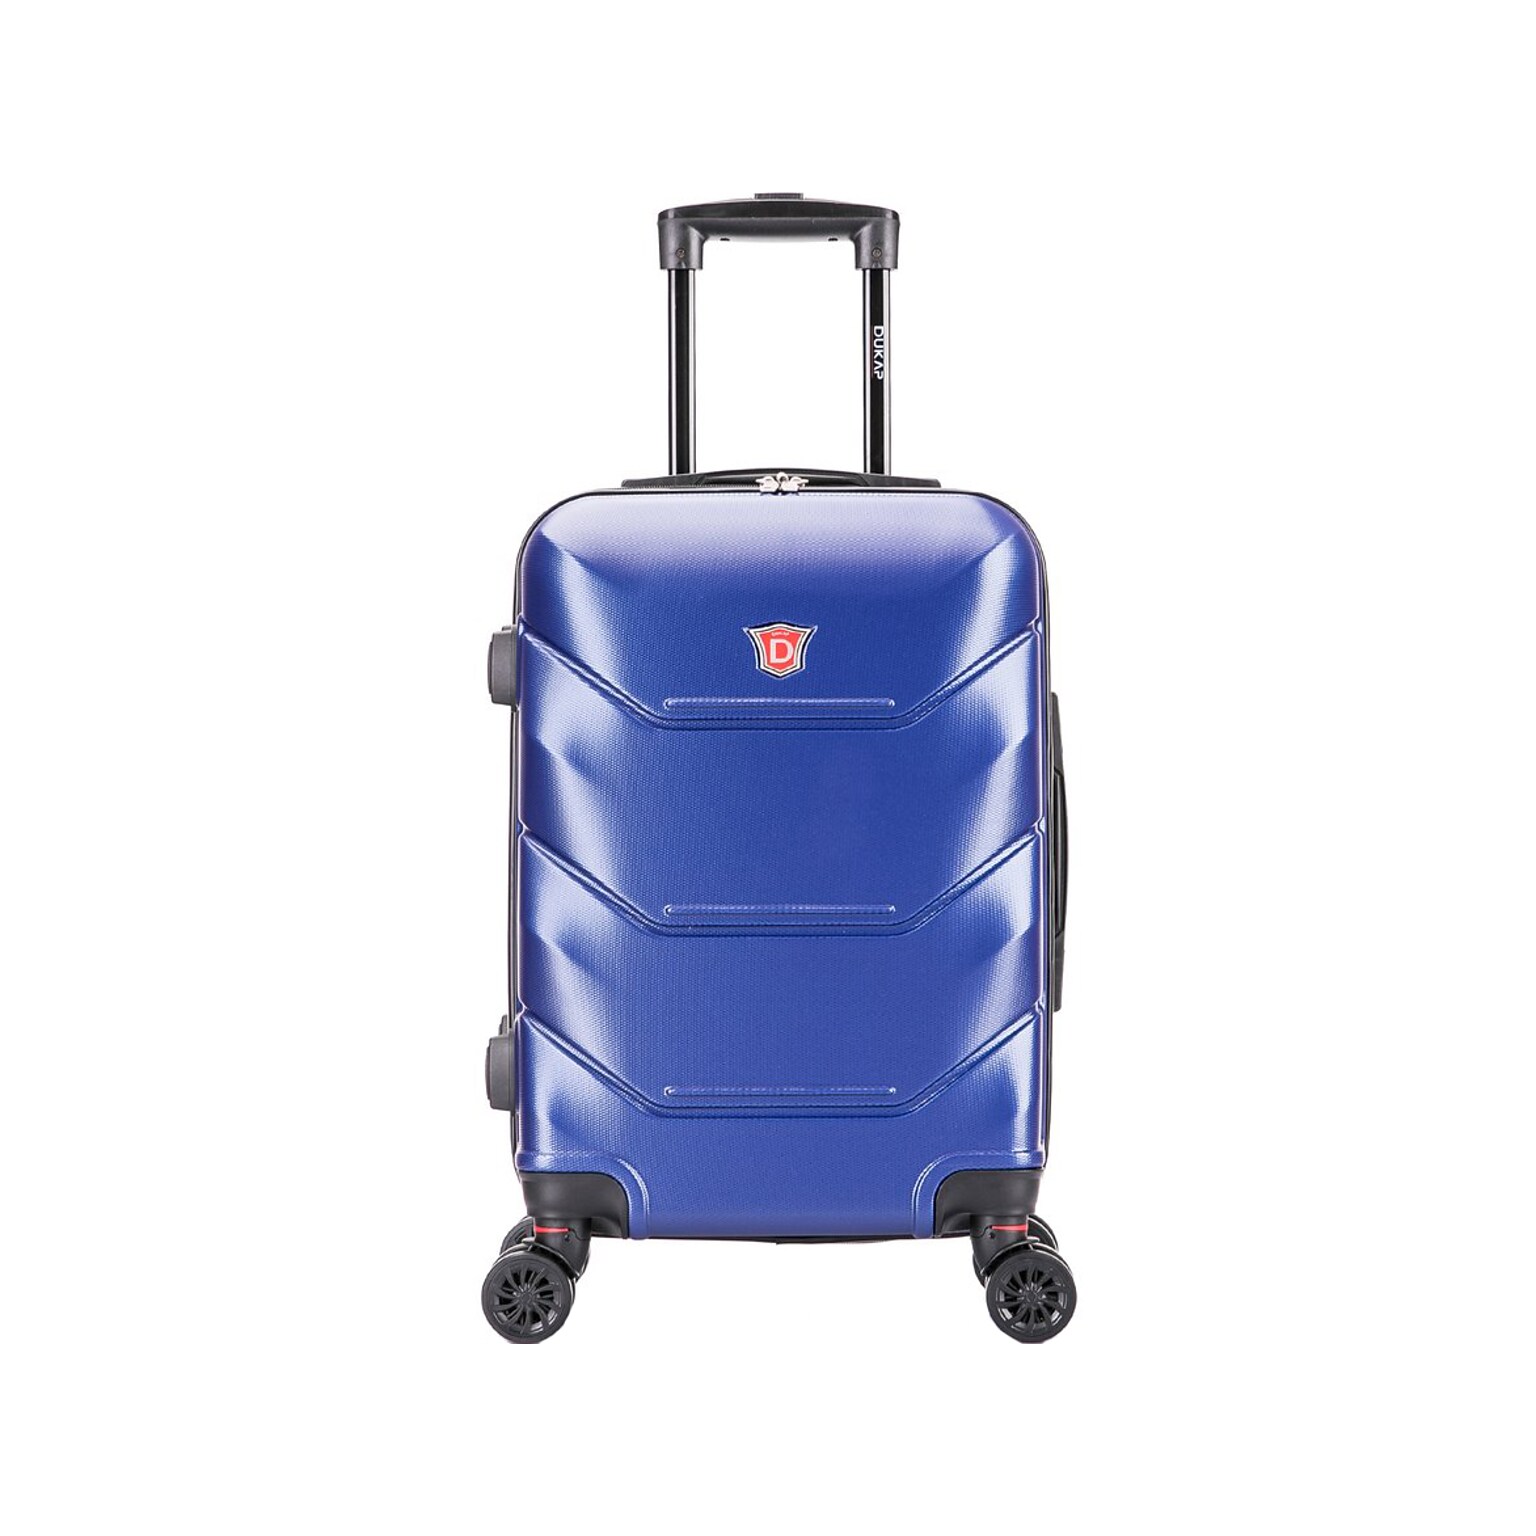 DUKAP Zonix 22.05 Hardside Carry-On Suitcase, 4-Wheeled Spinner, Blue (DKZON00S-BLU)